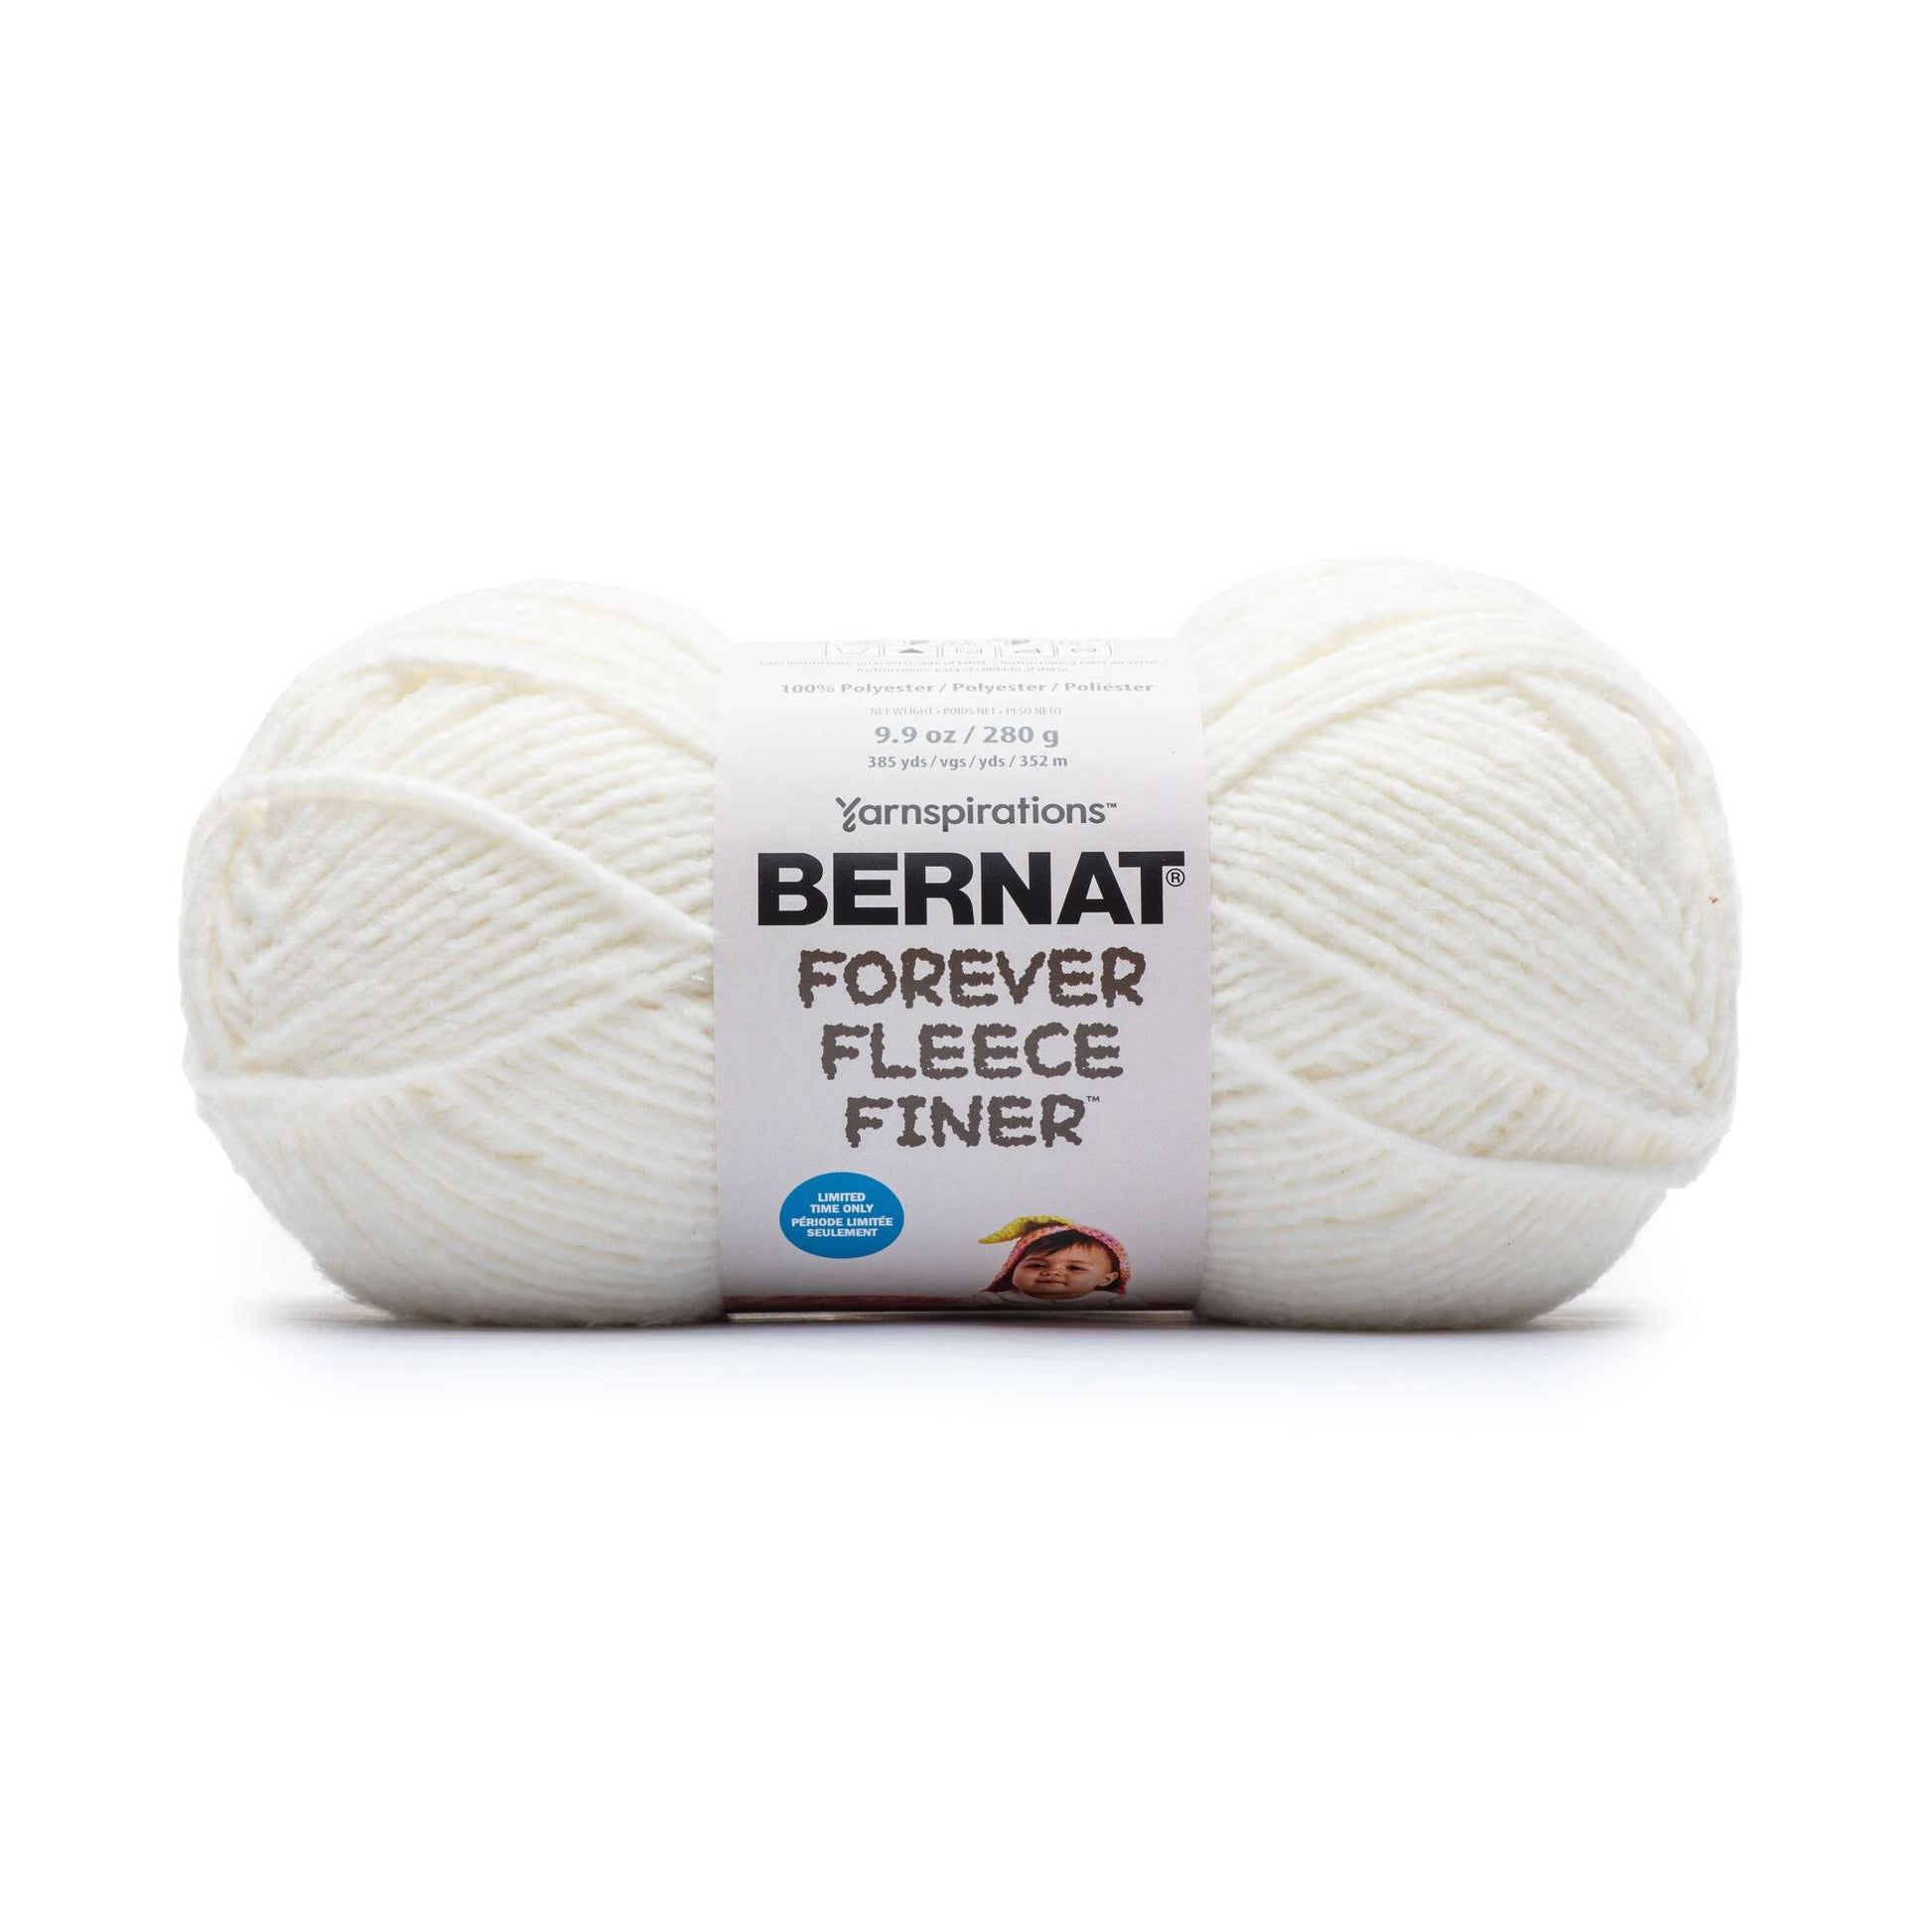 Bernat Forever Fleece Finer Yarn - Discontinued Shades White Cloud